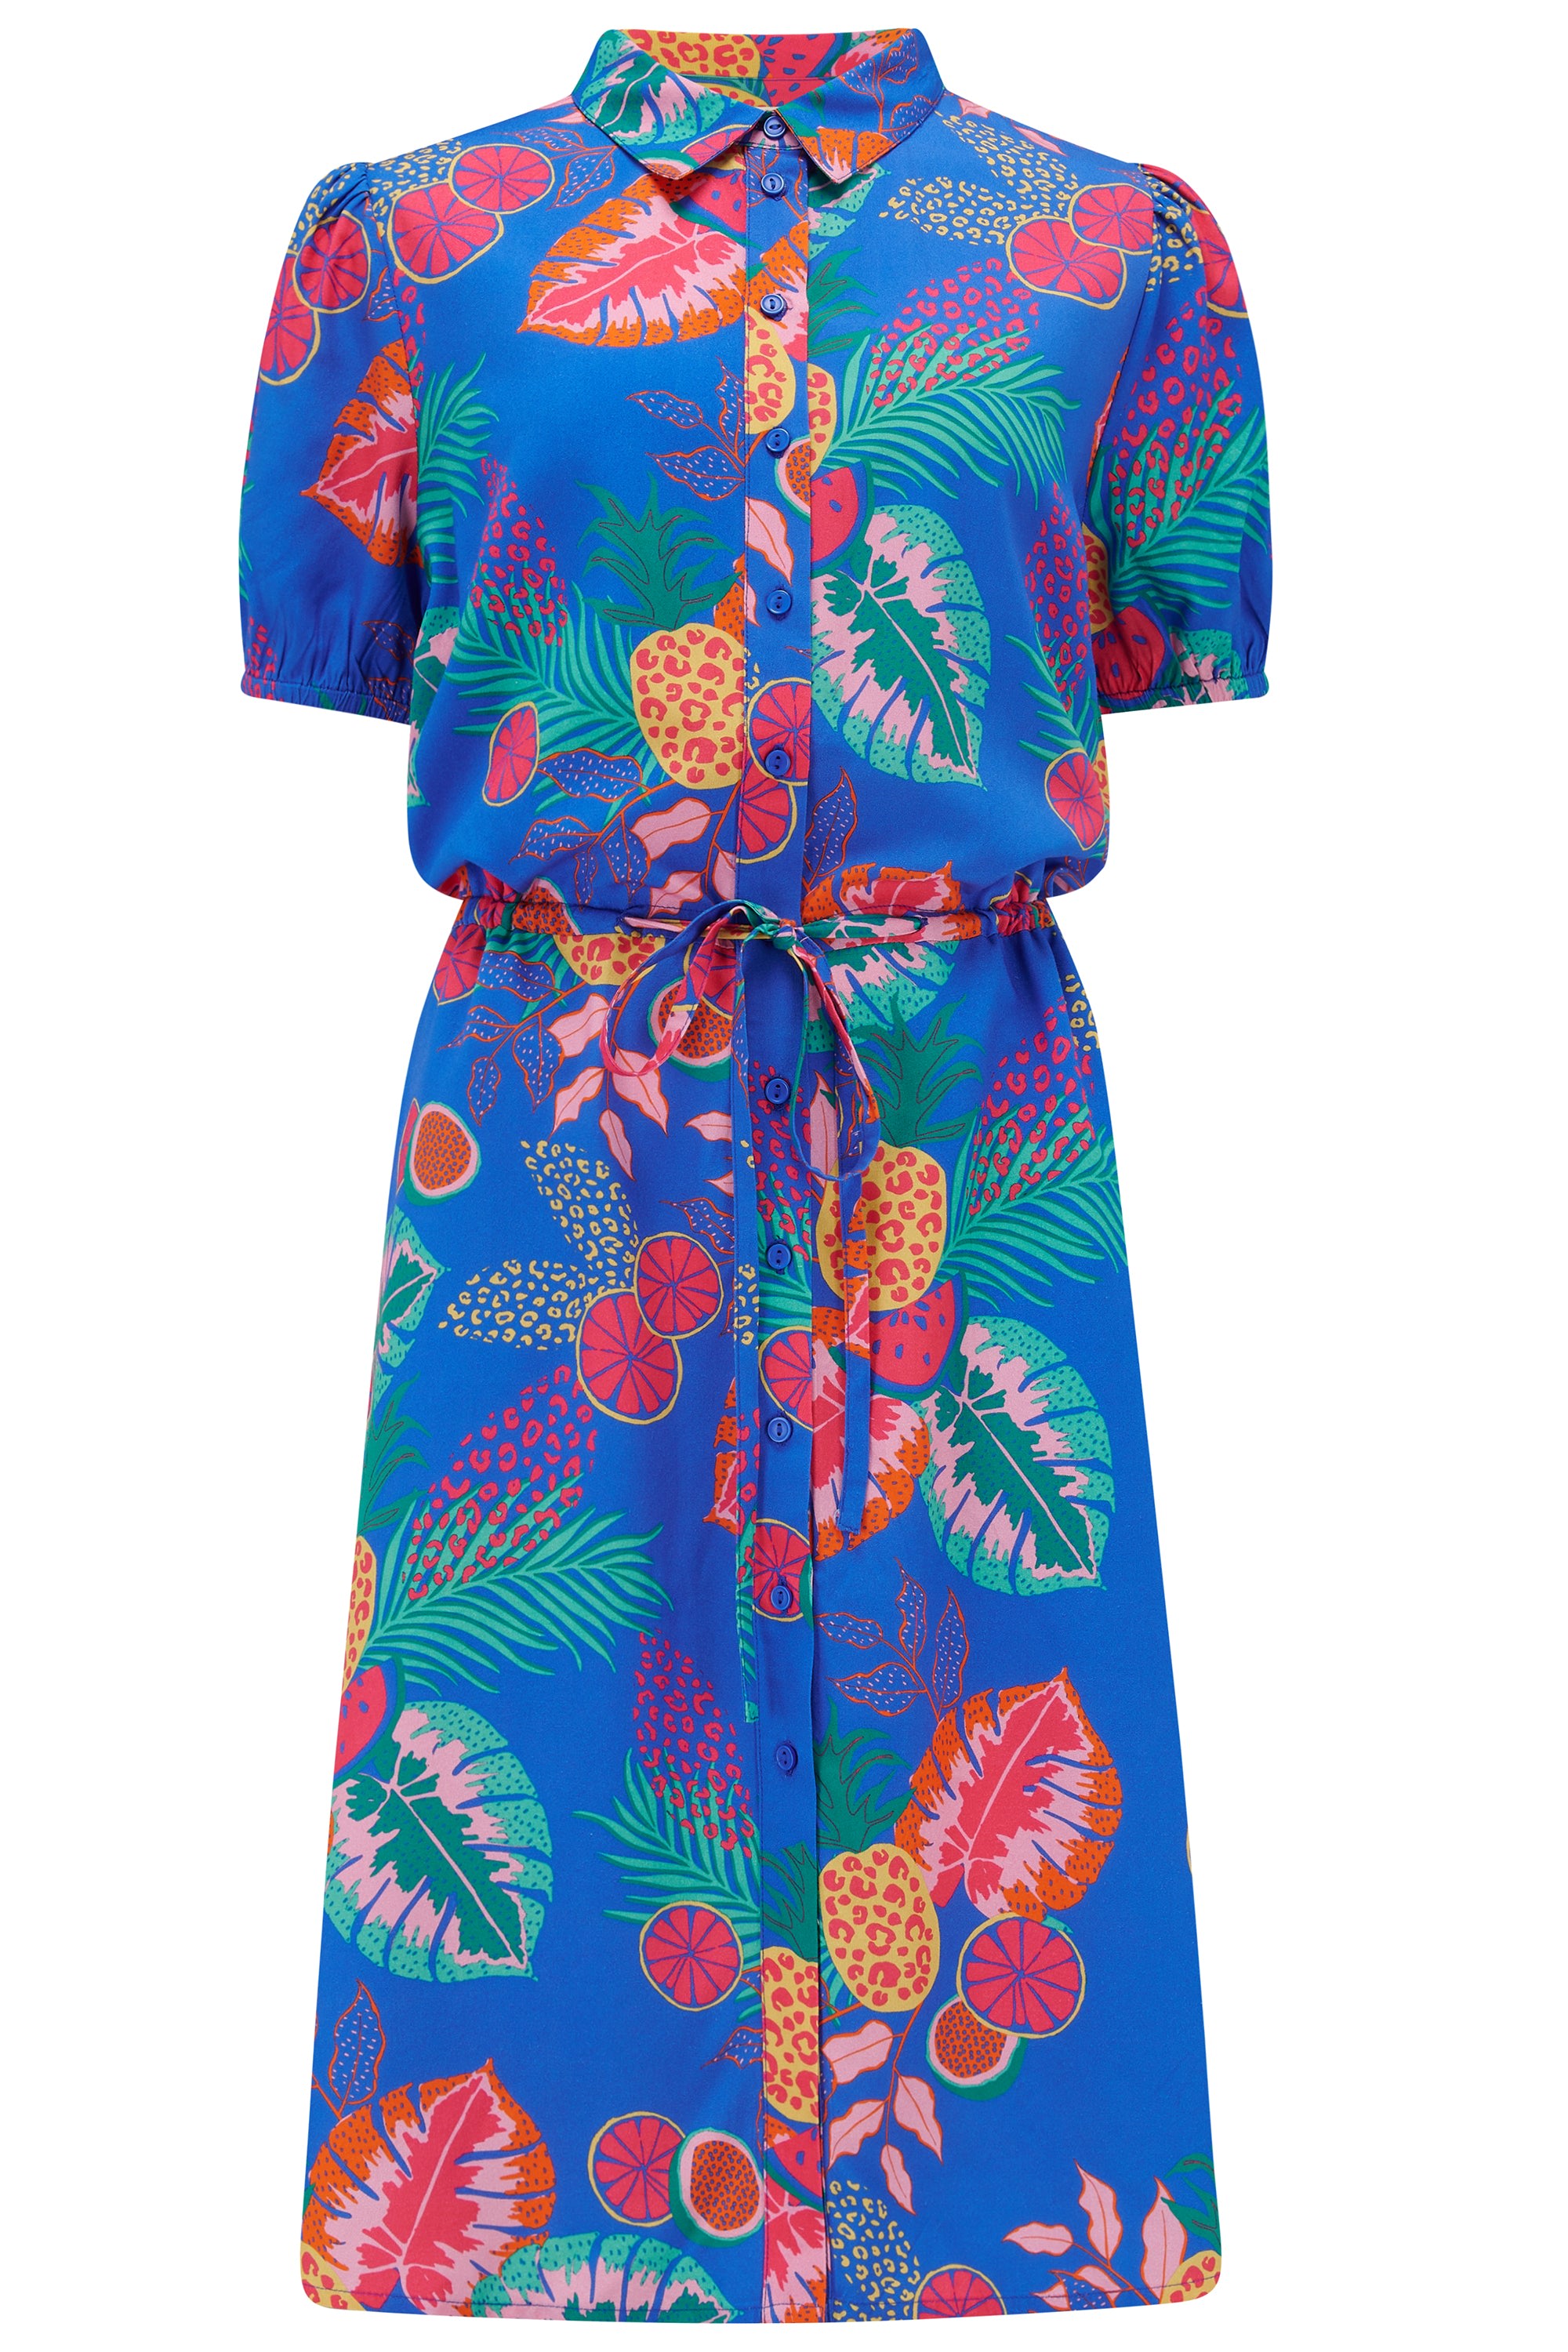 Sugarhill Brighton Women's Salma Shirt Dress Multi, Tropical Fruits In Blue